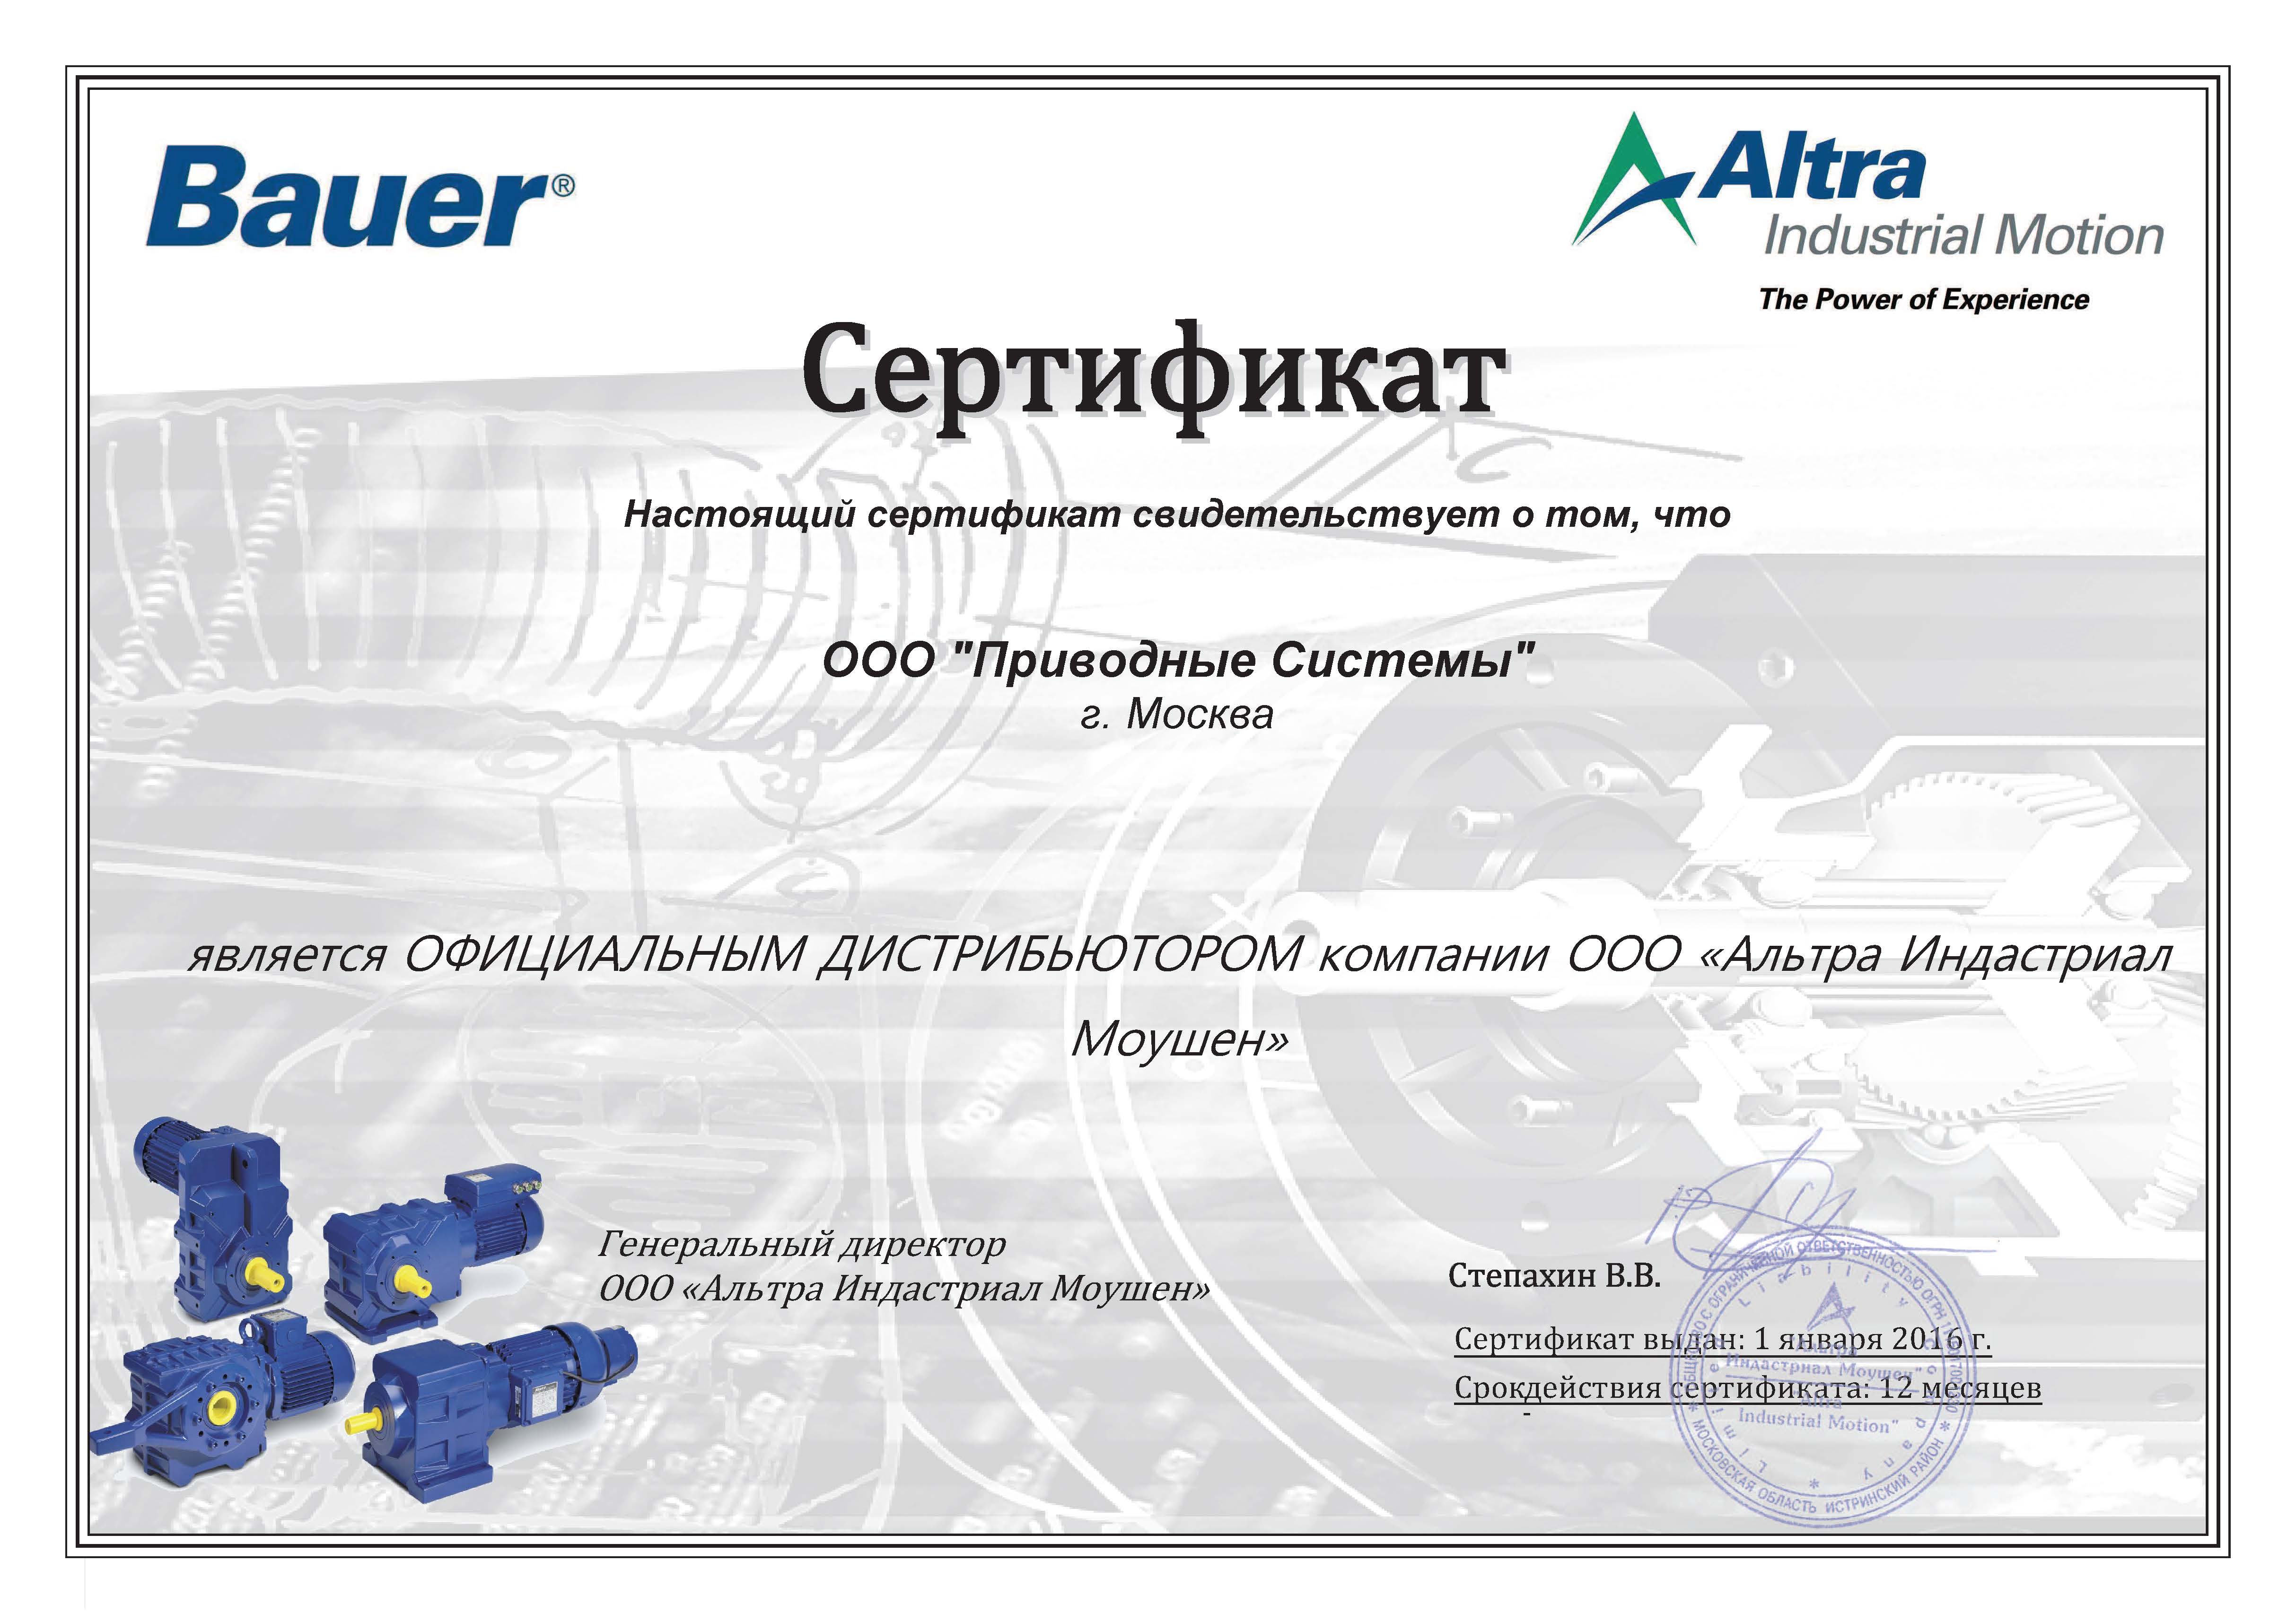 Сертификат дистрибьютора Bauer